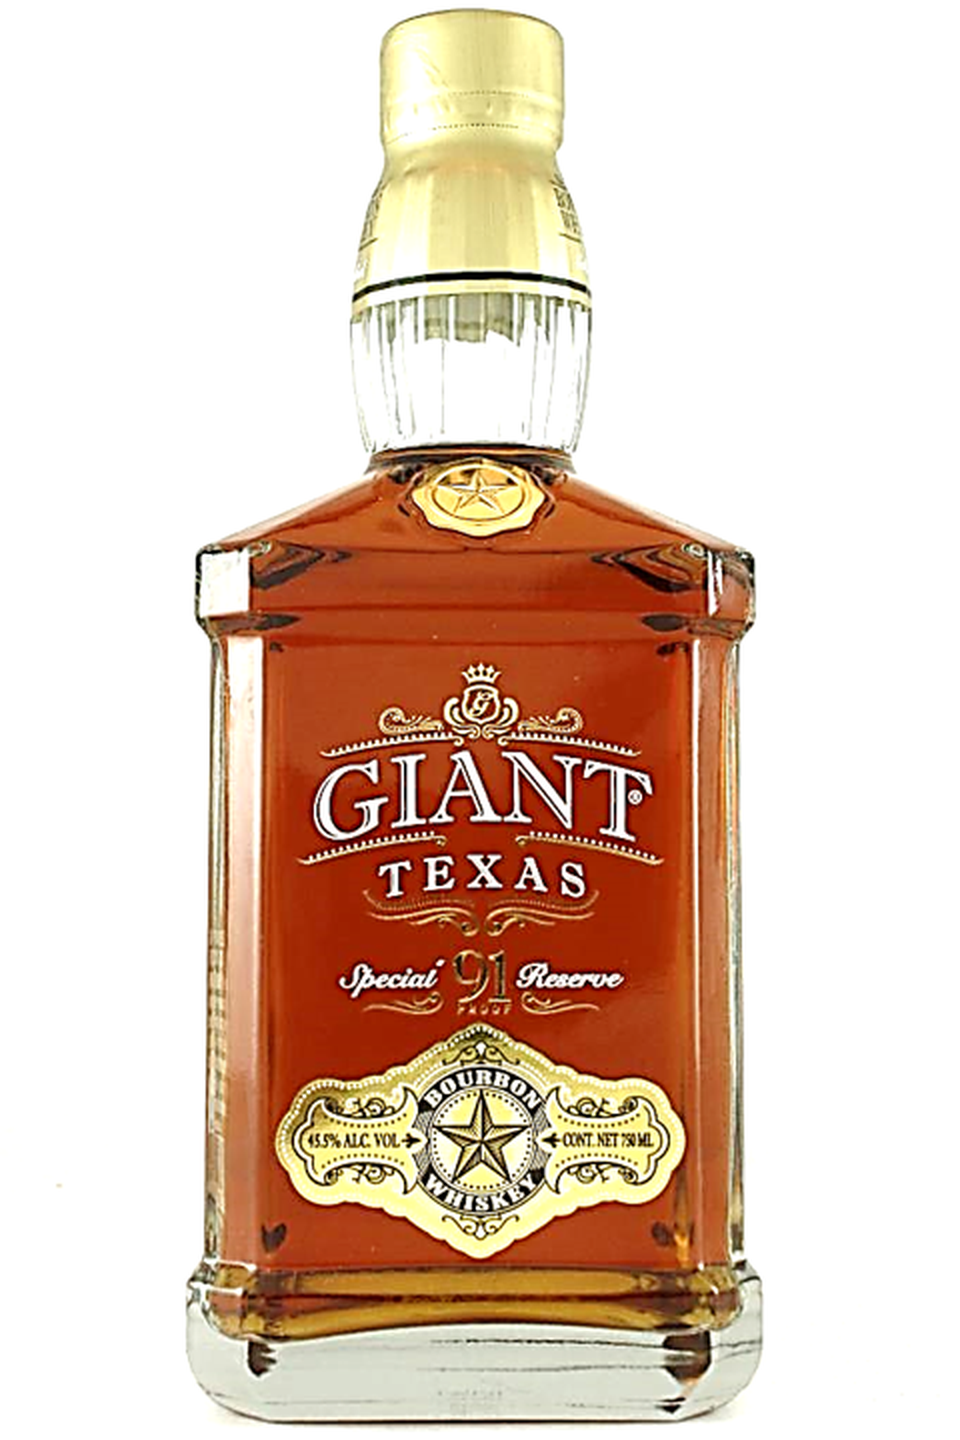 Giant Texas Special Reserve Bourbon Whisky (750ml Bottle)